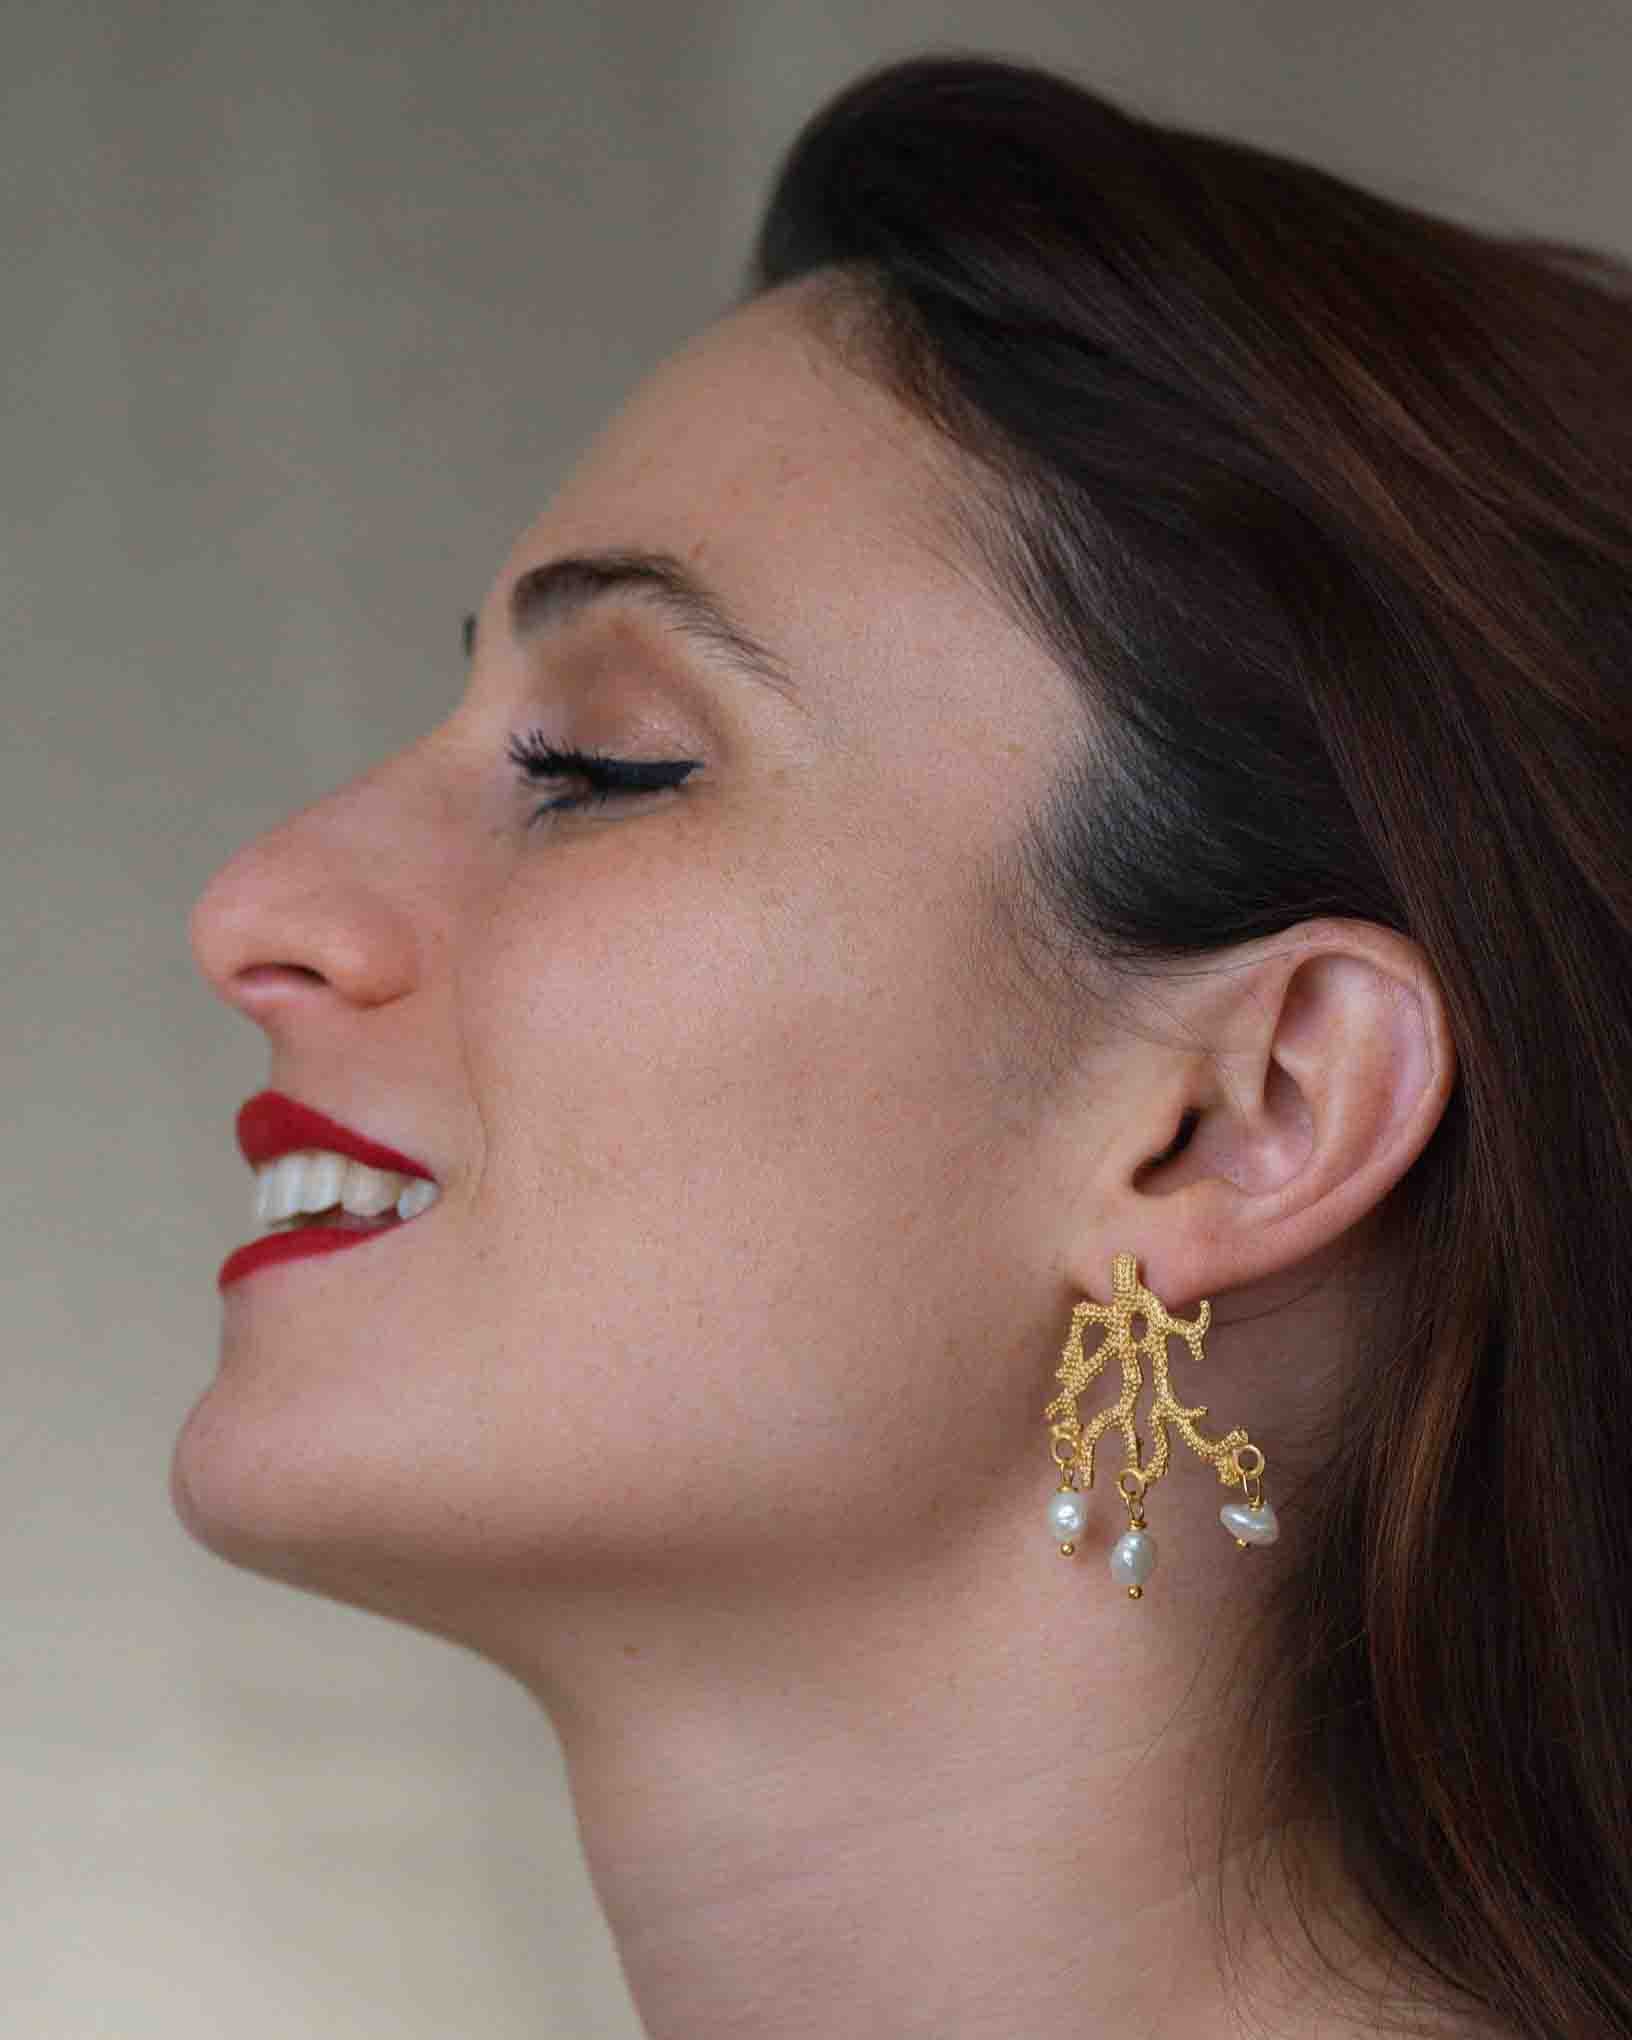 Ohrring Corallo Bianco aus der Kollektion Perle e Coralli von Donna Rachele Jewelry